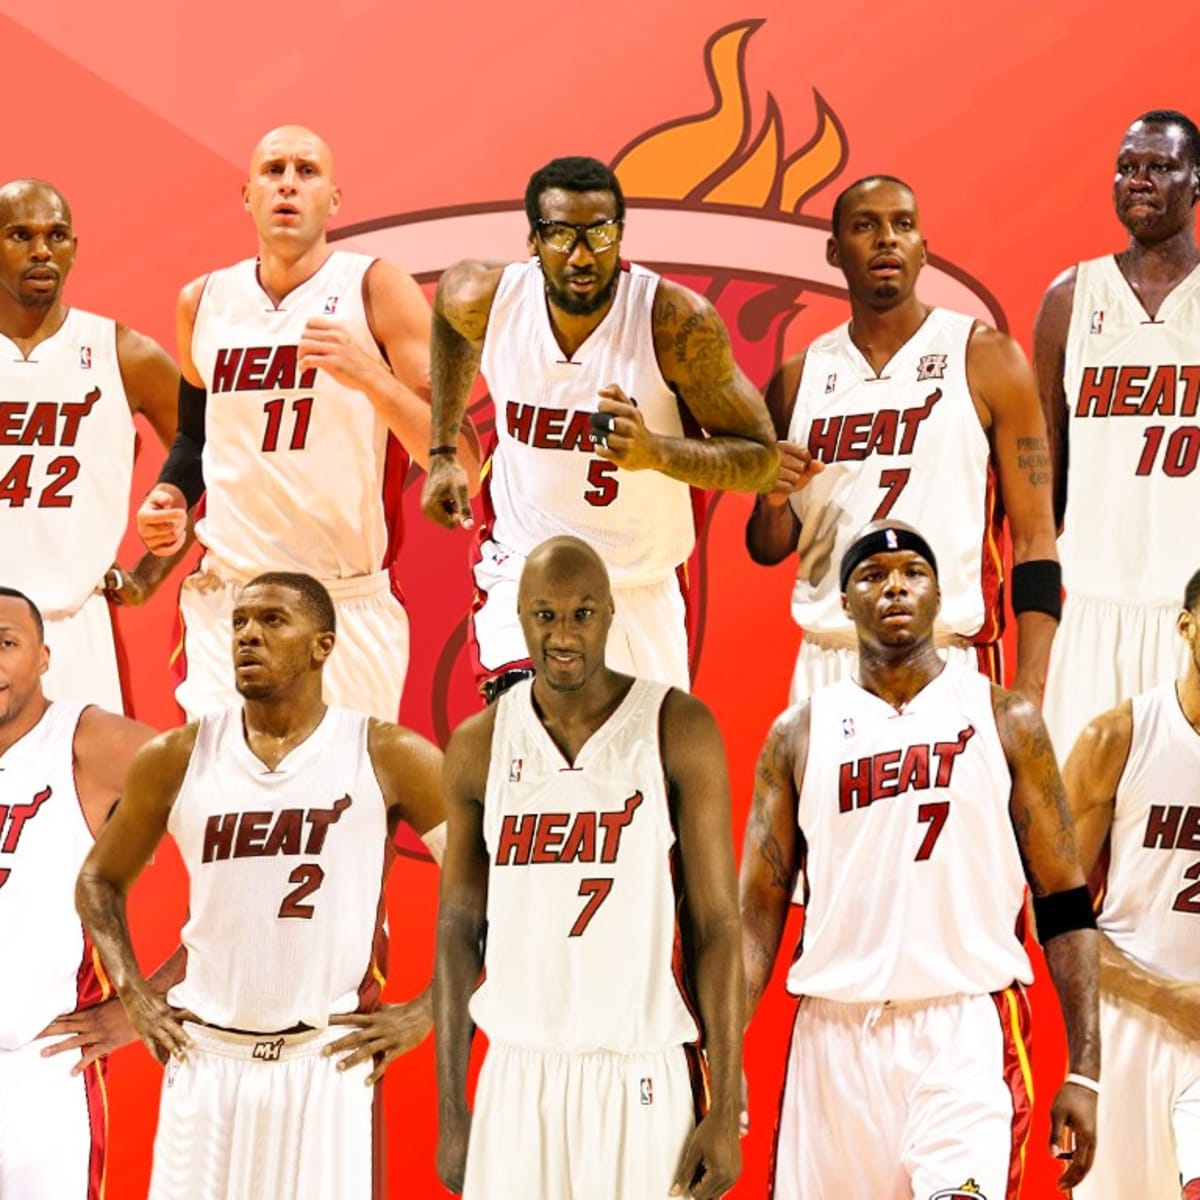 Miami Heat 2021 Season: No Players in All-Star Game